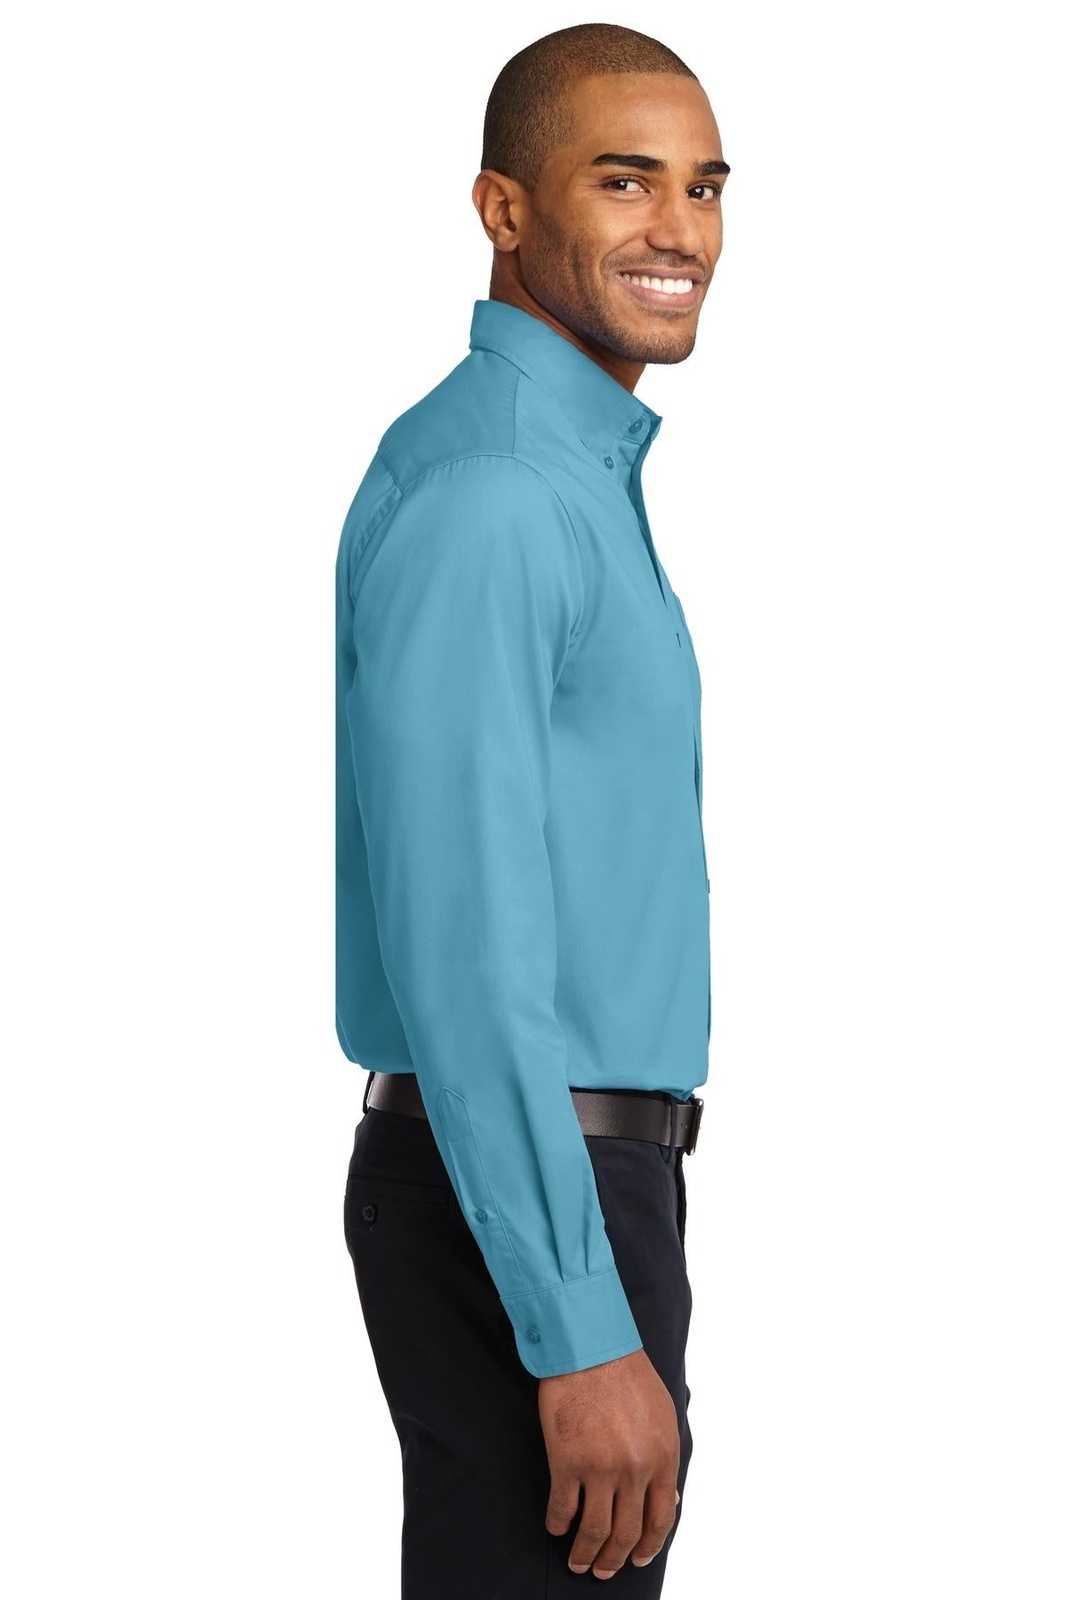 Port Authority S608 Long Sleeve Easy Care Shirt - Maui Blue - HIT a Double - 3